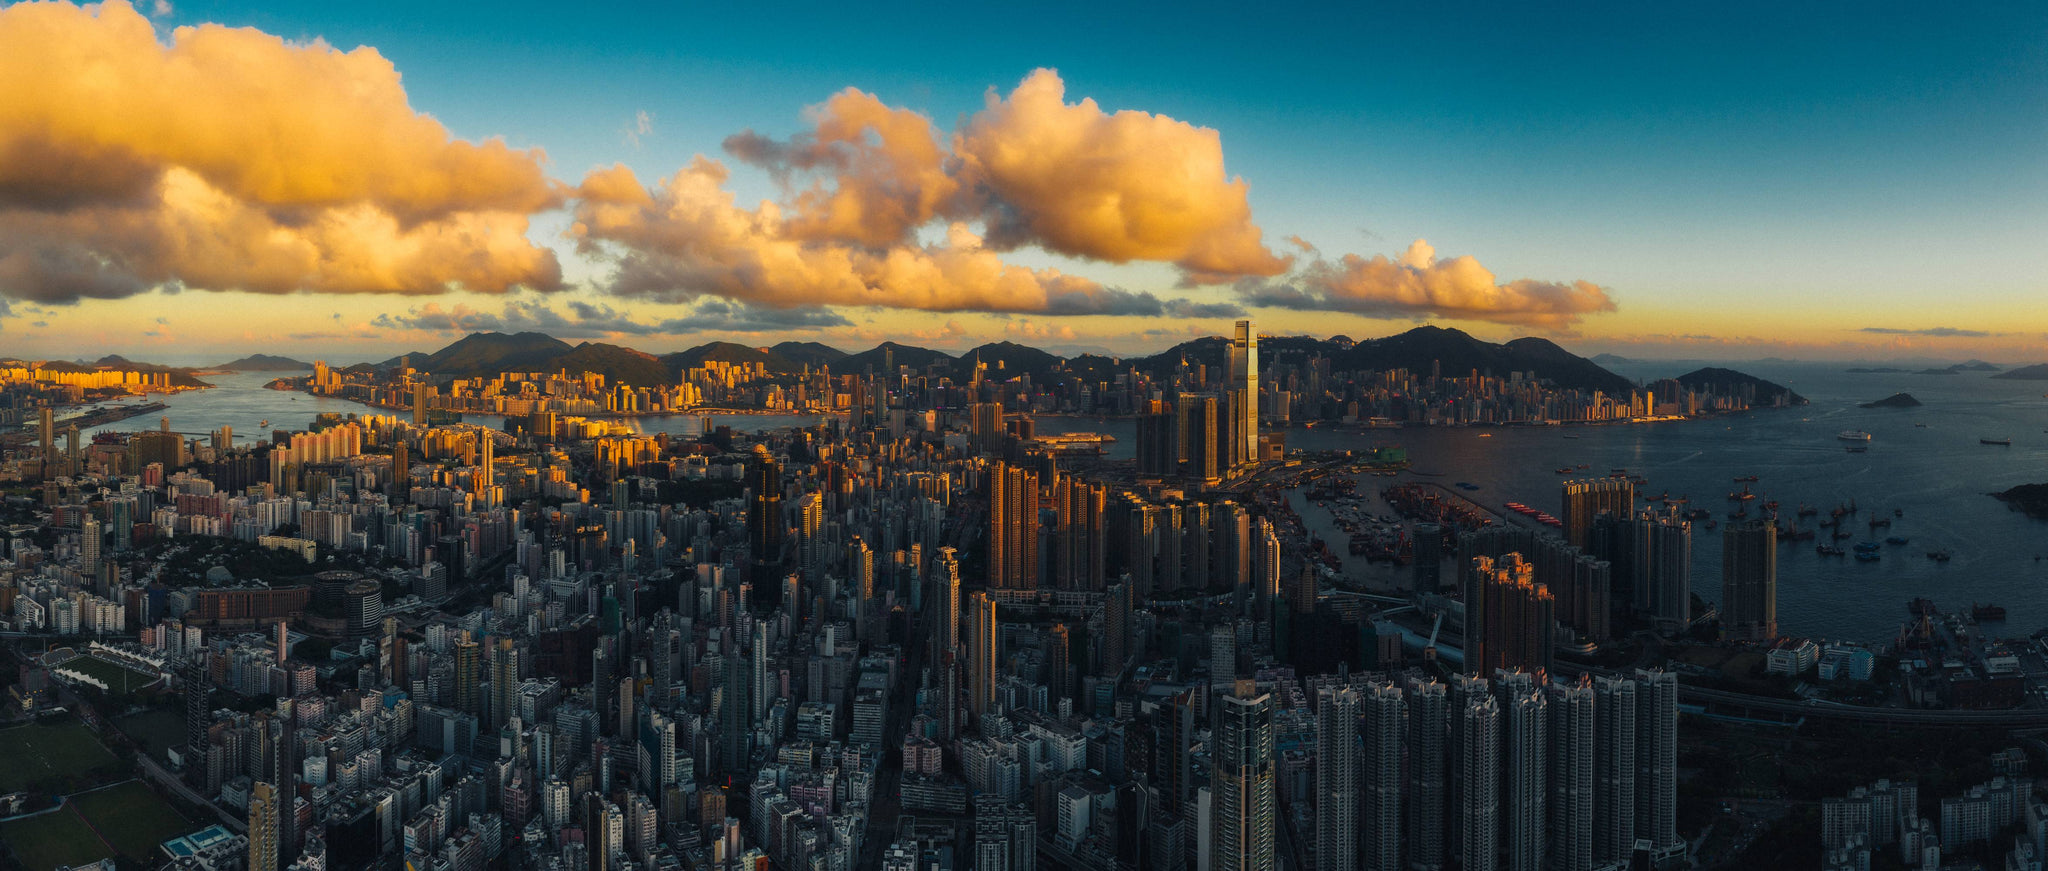 Hong Kong Glamour (Panoramic Edition) by Martin Lee - Print